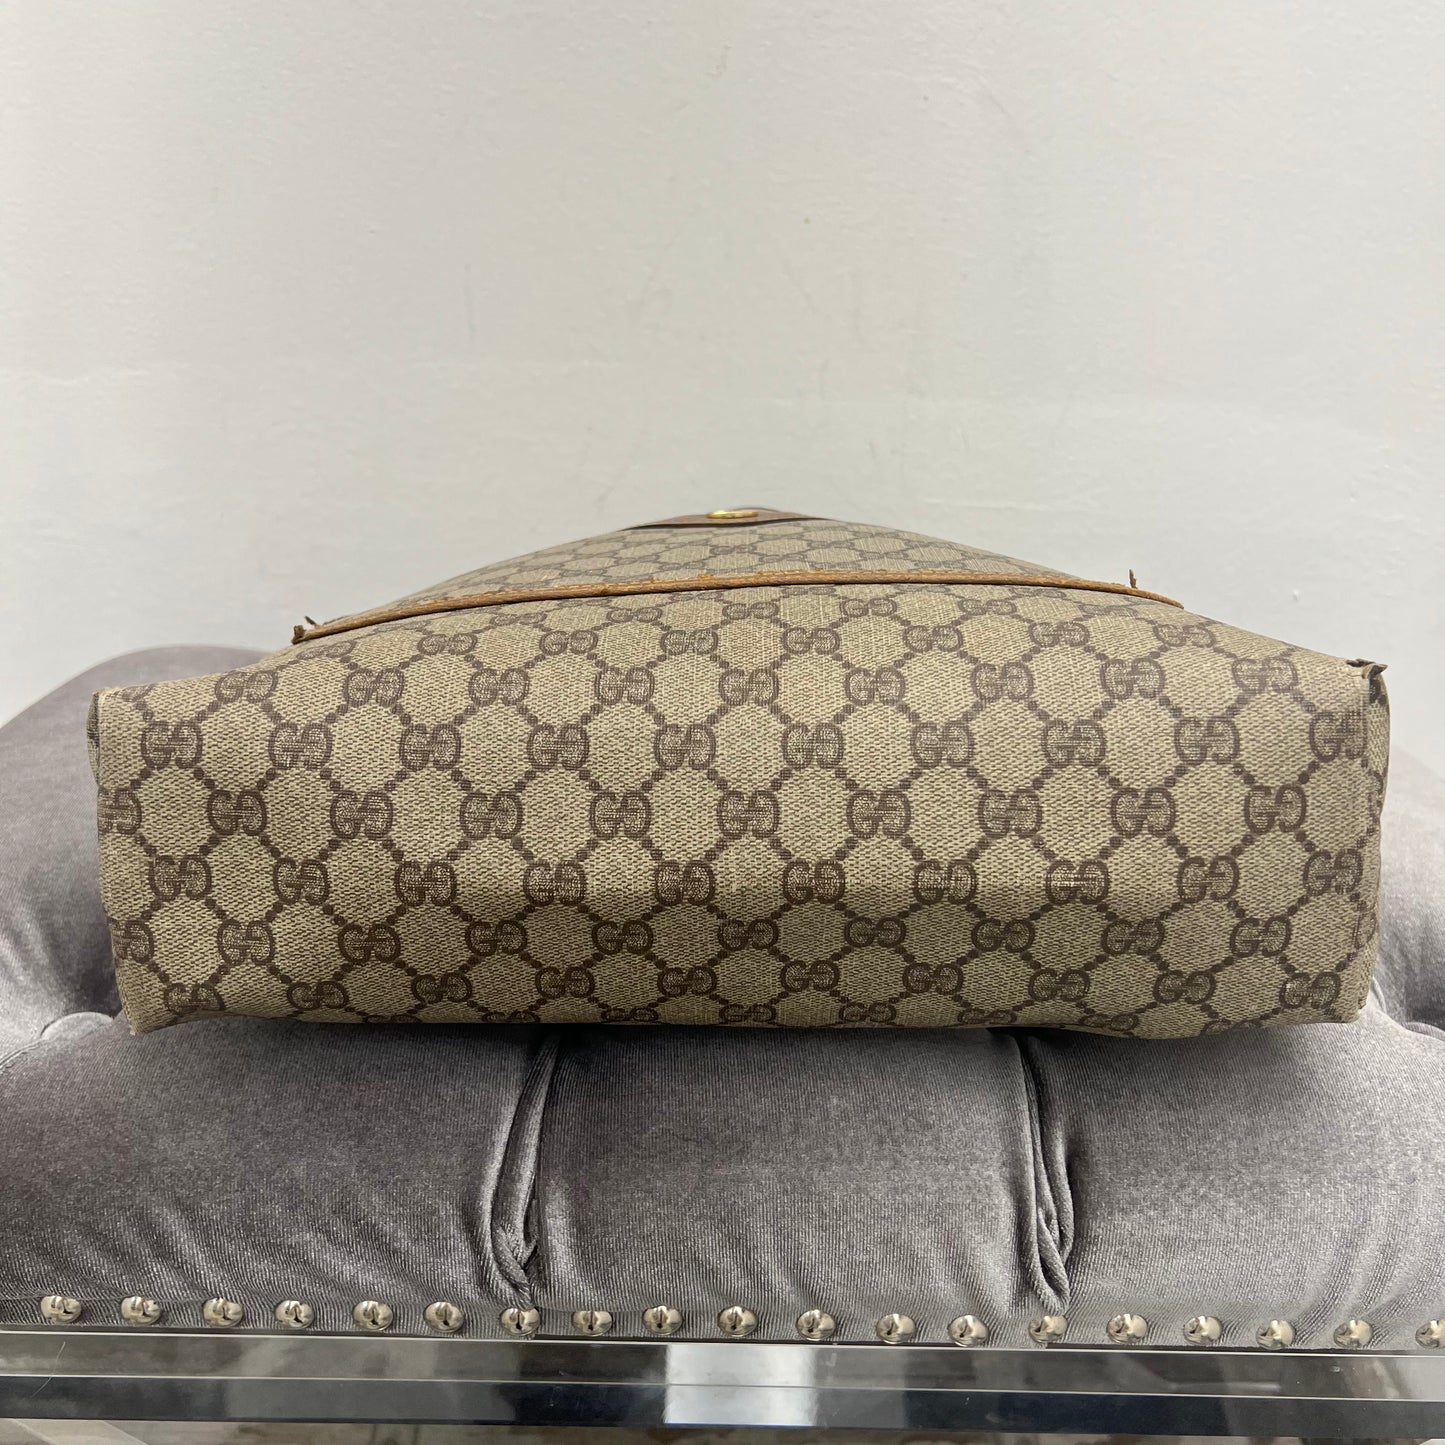 Gucci Vintage Tote Bag